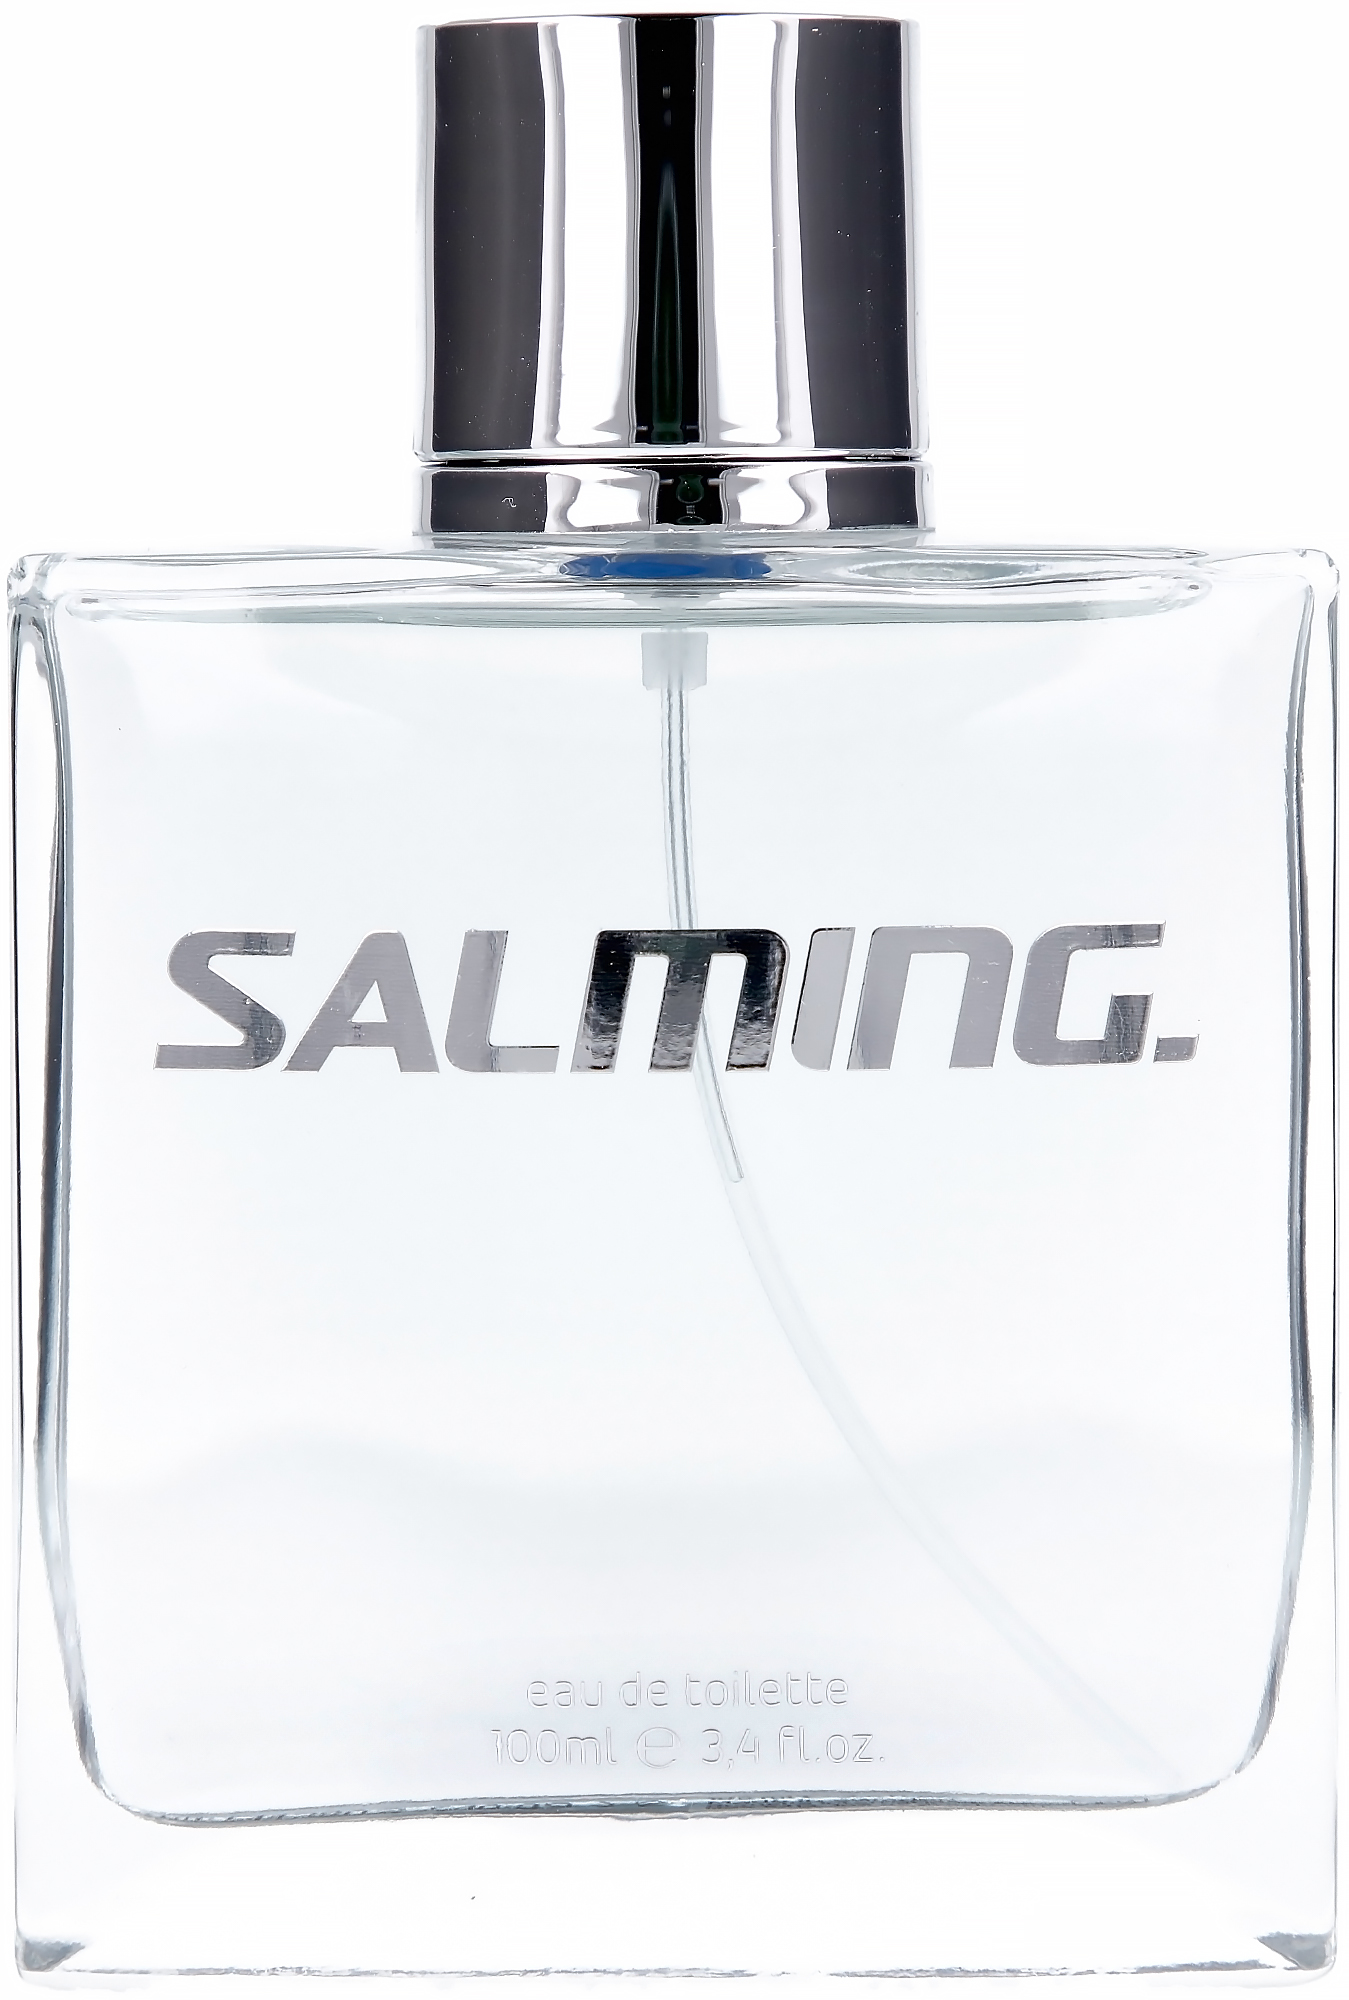 salming salming silver